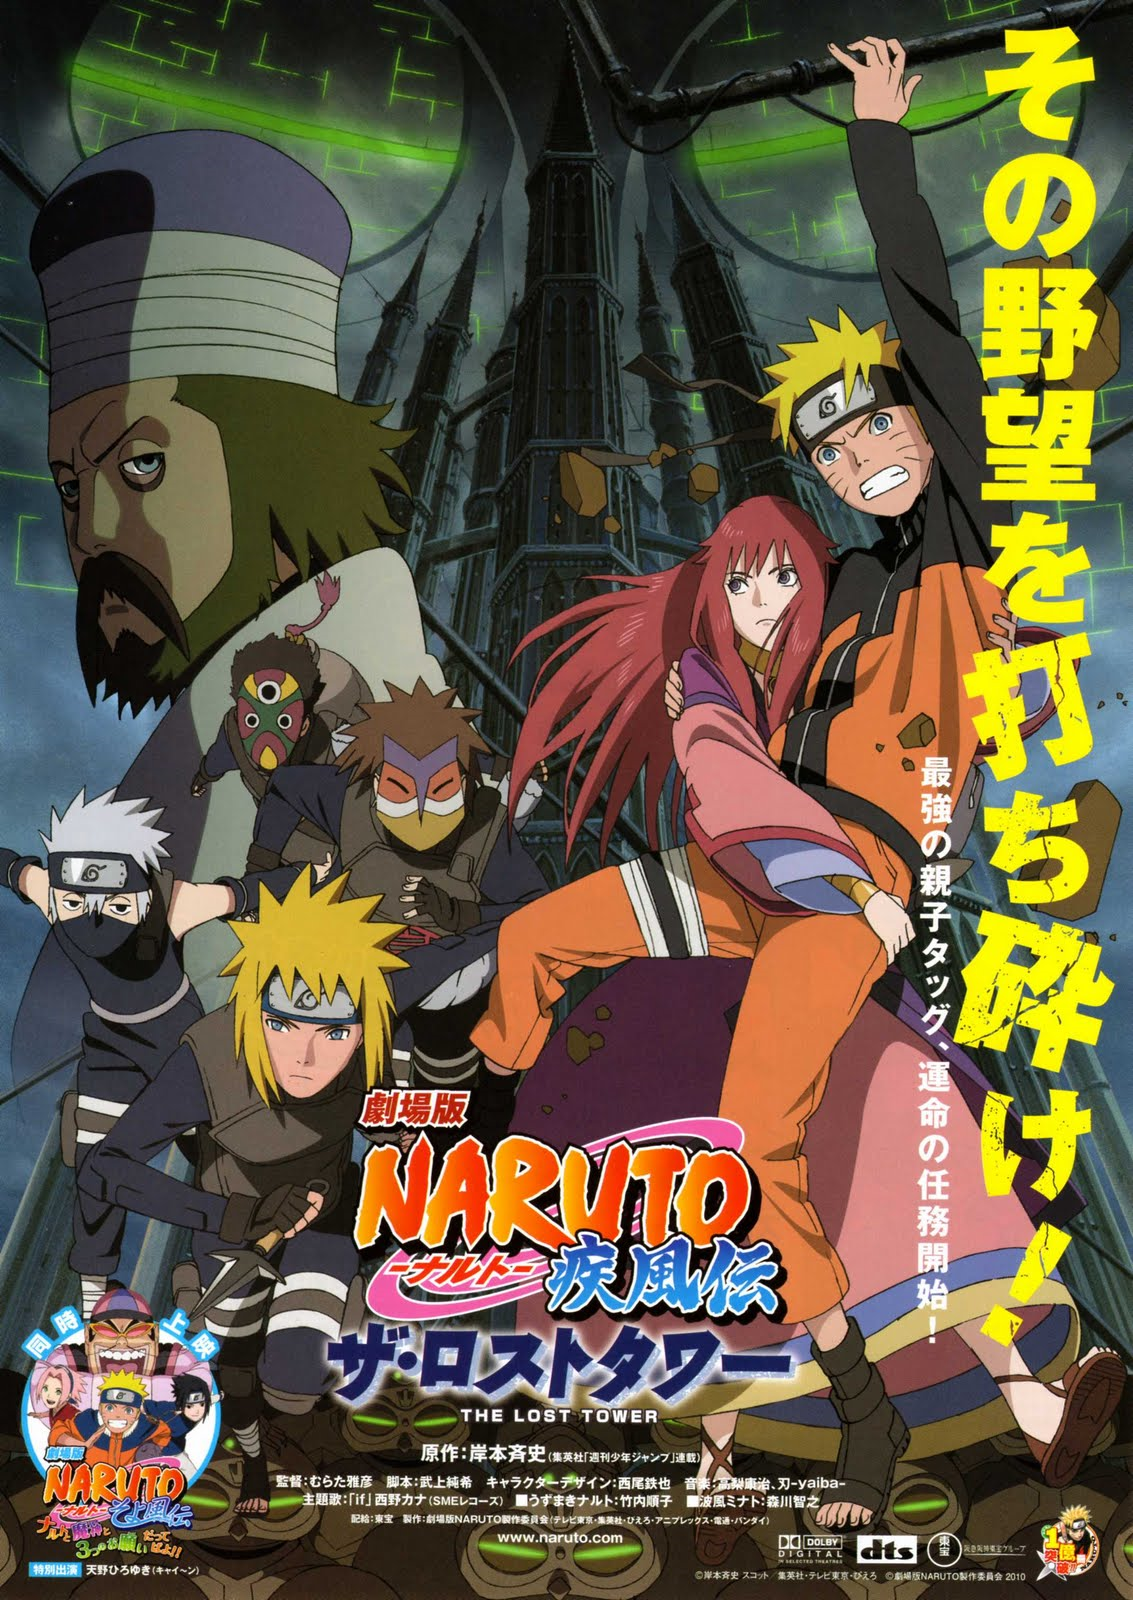 Boruto: Naruto The Movie To Return To Theaters For Two-Day Run